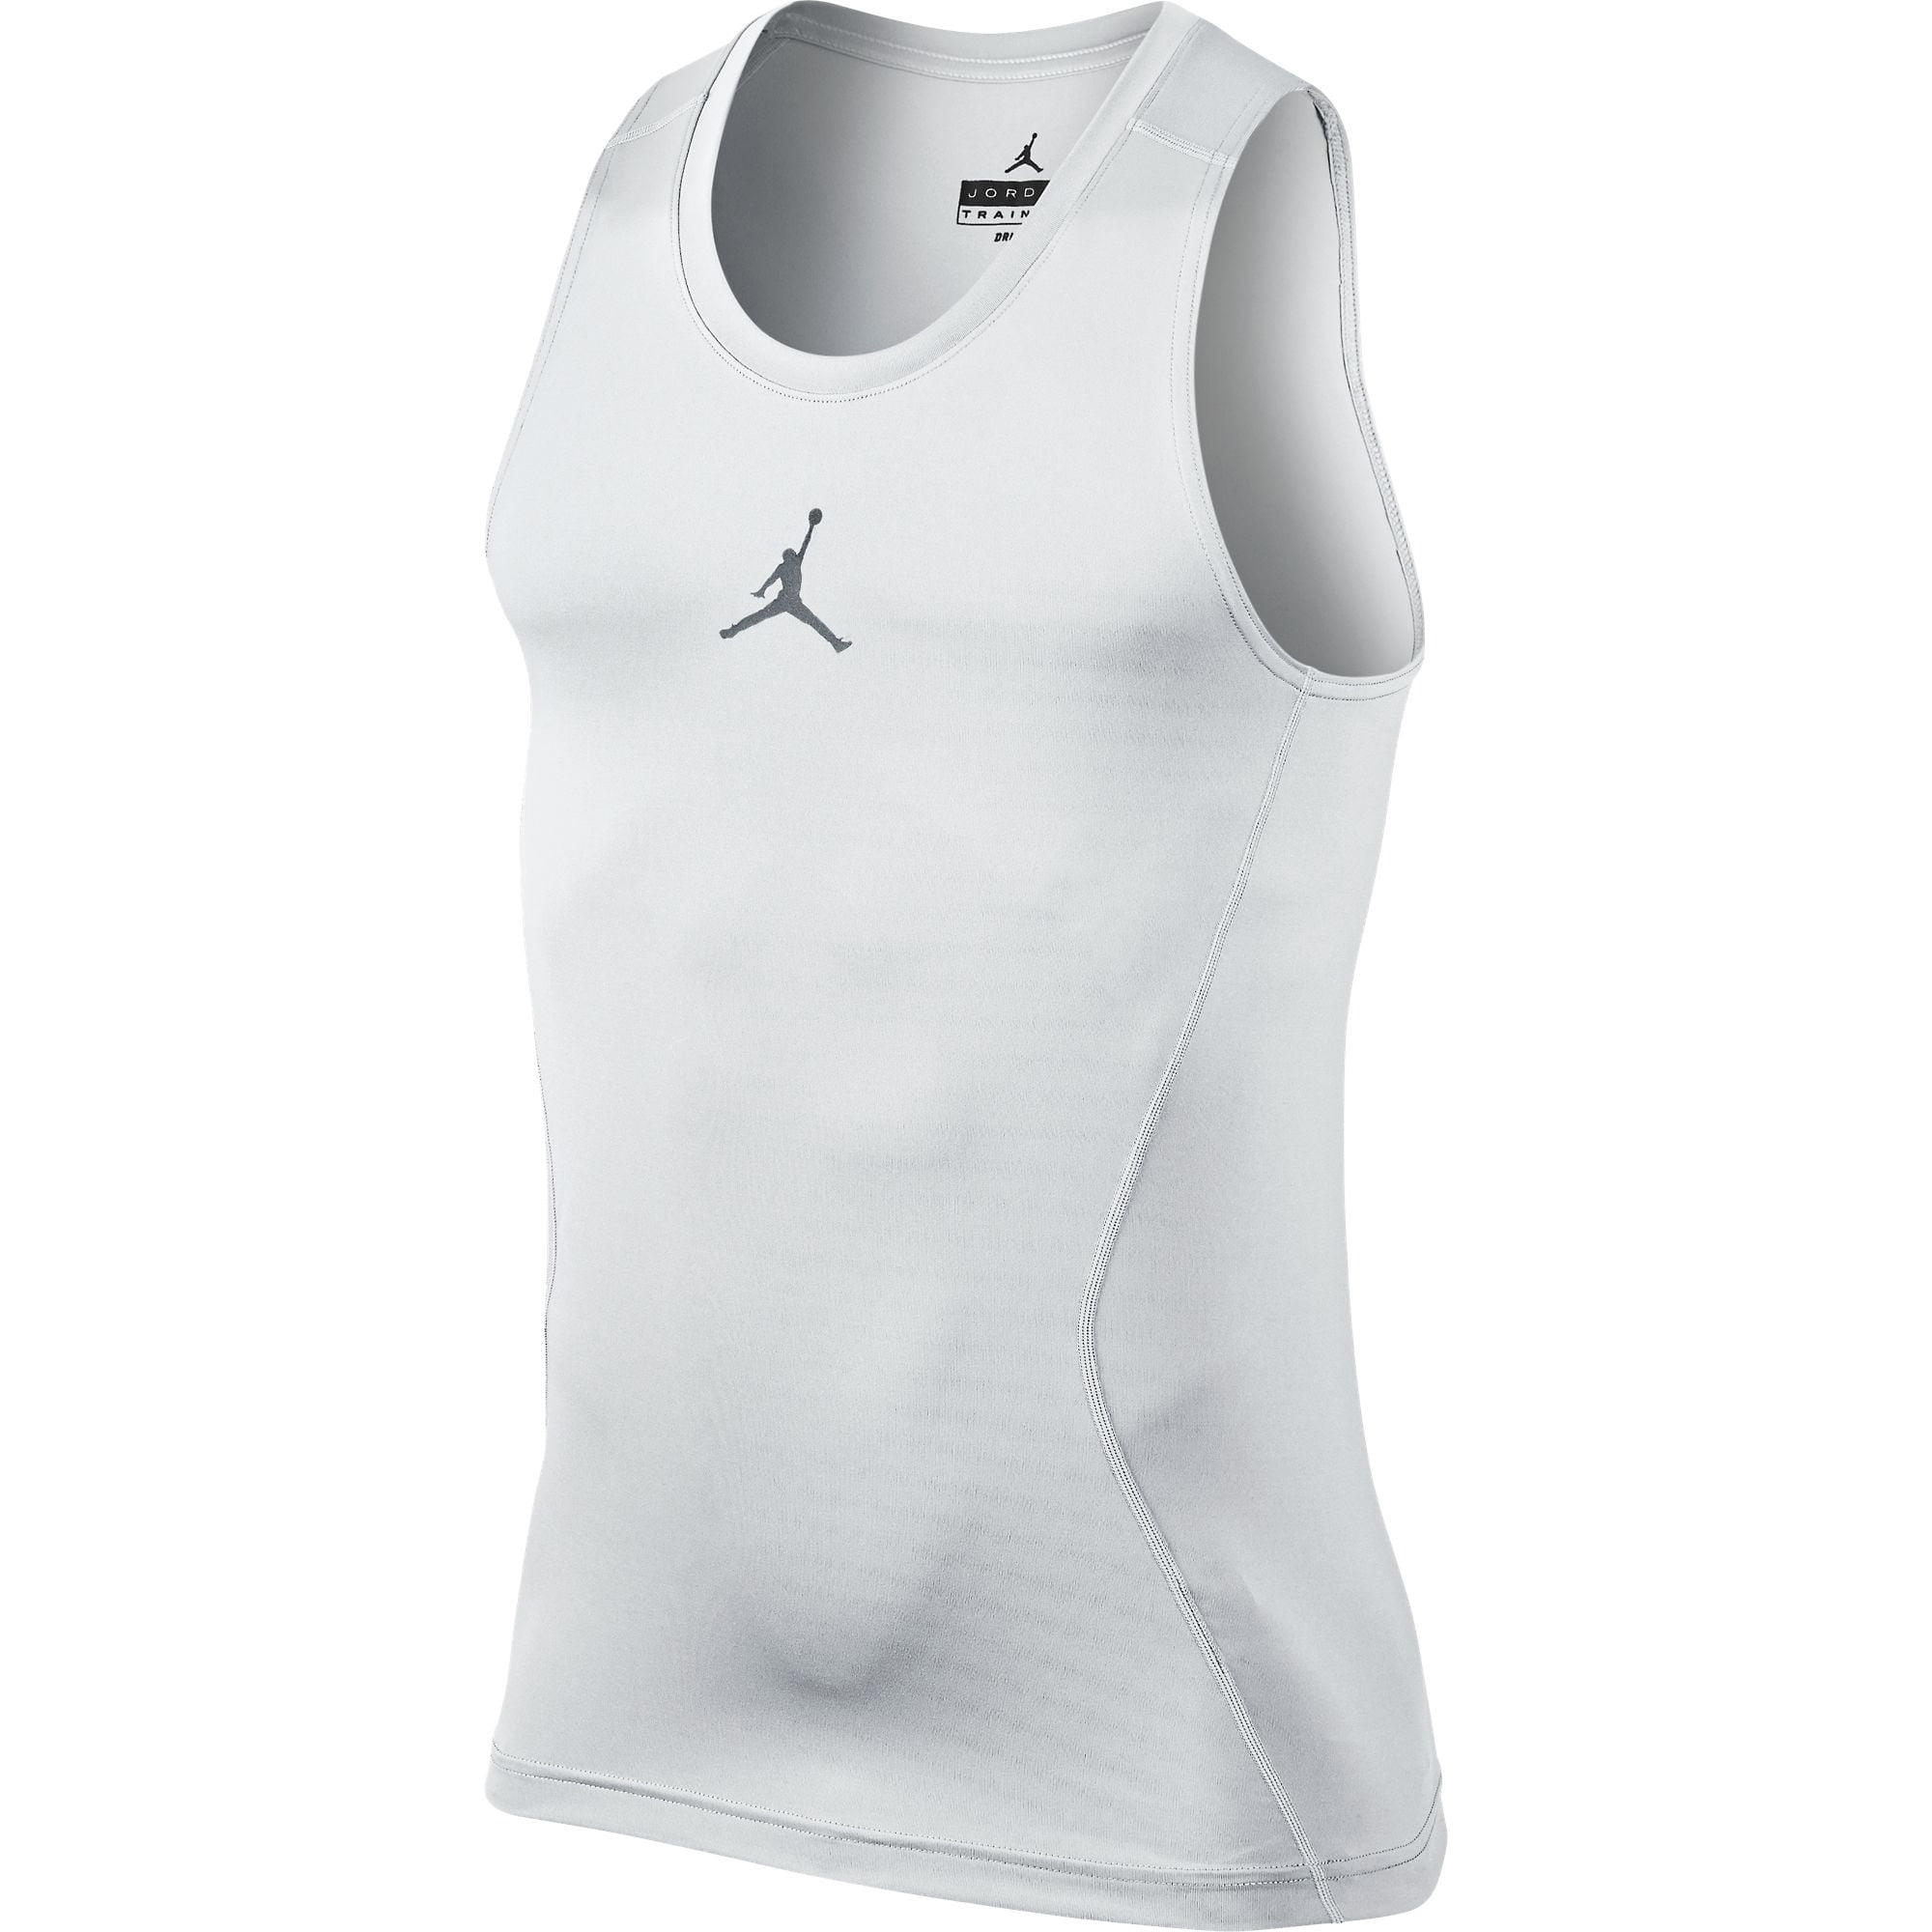 Jordan Men's Dri-Fit Nike AJ All Season Compression Tank Top